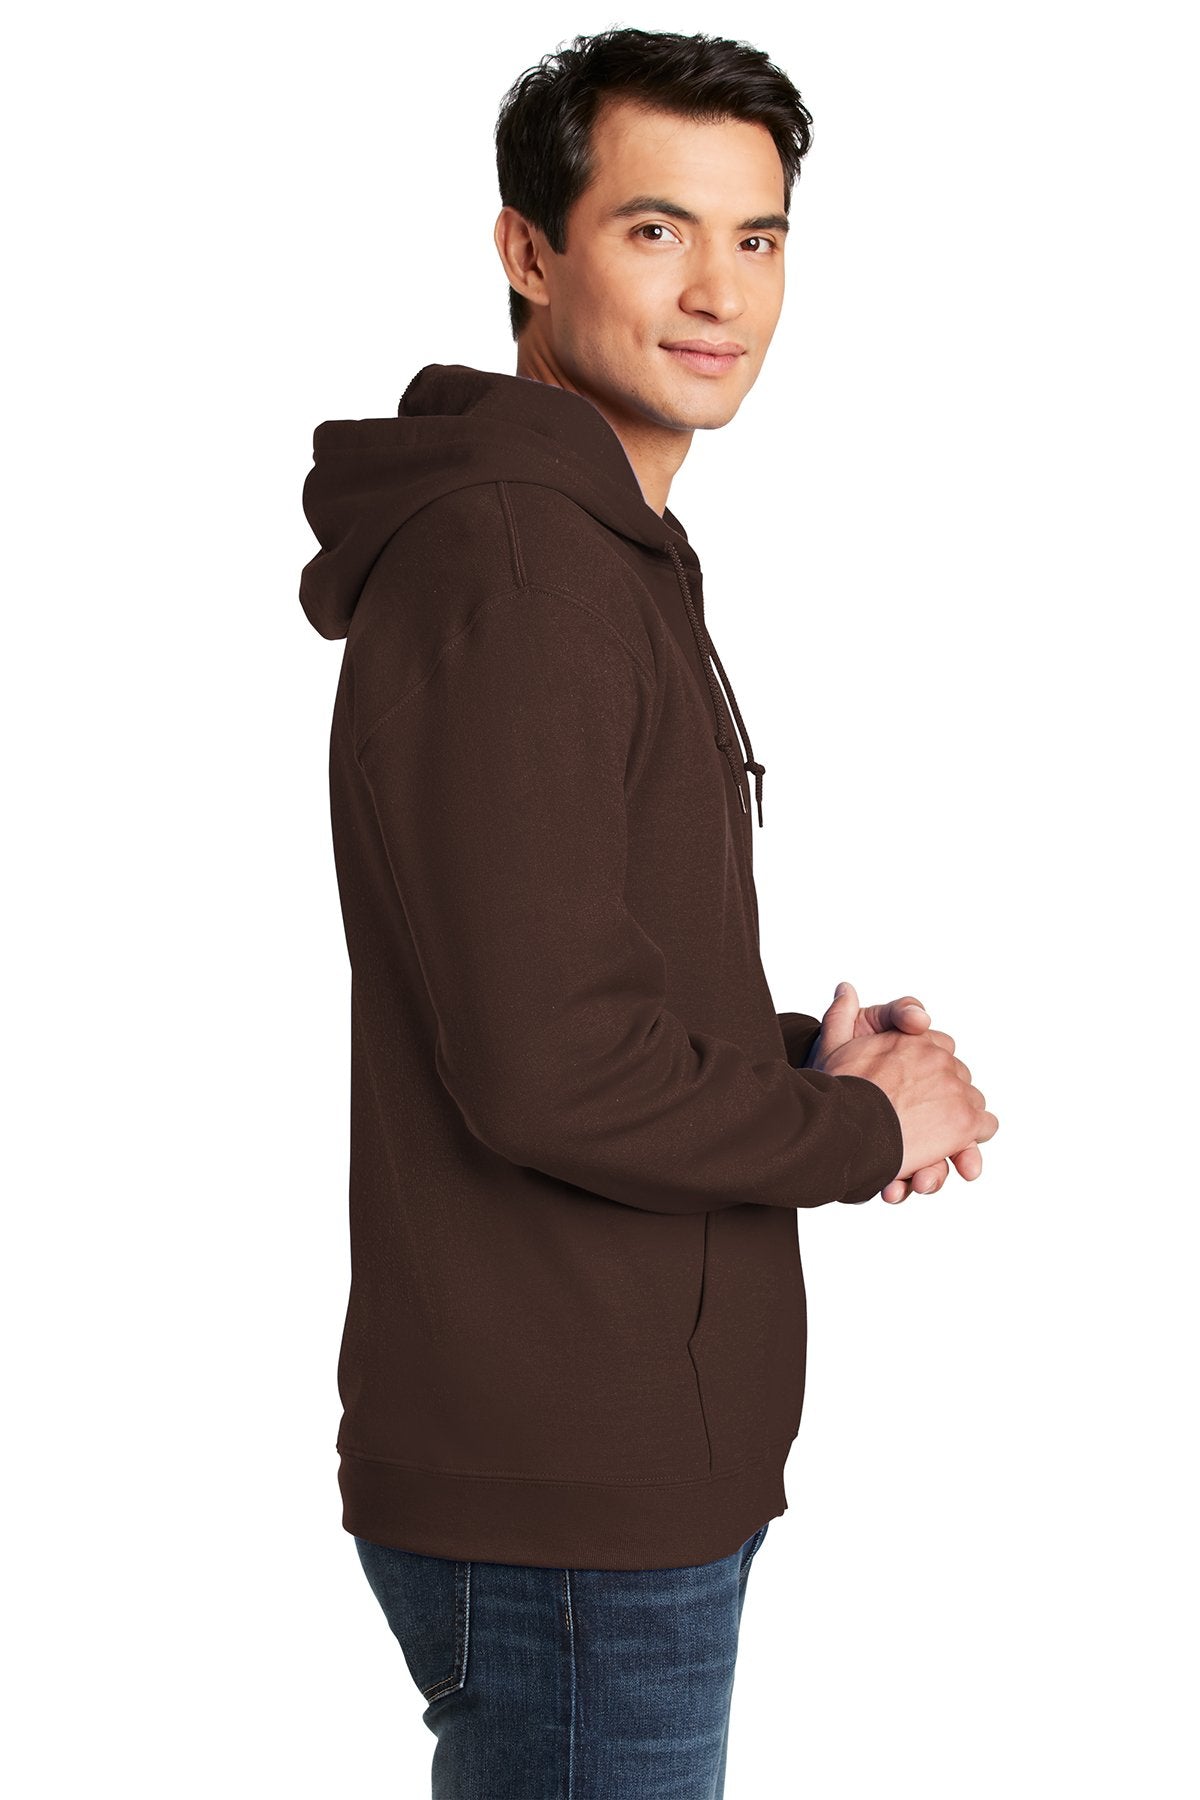 Gildan Heavy Blend Full Zip Hooded Sweatshirt Dark Chocolate